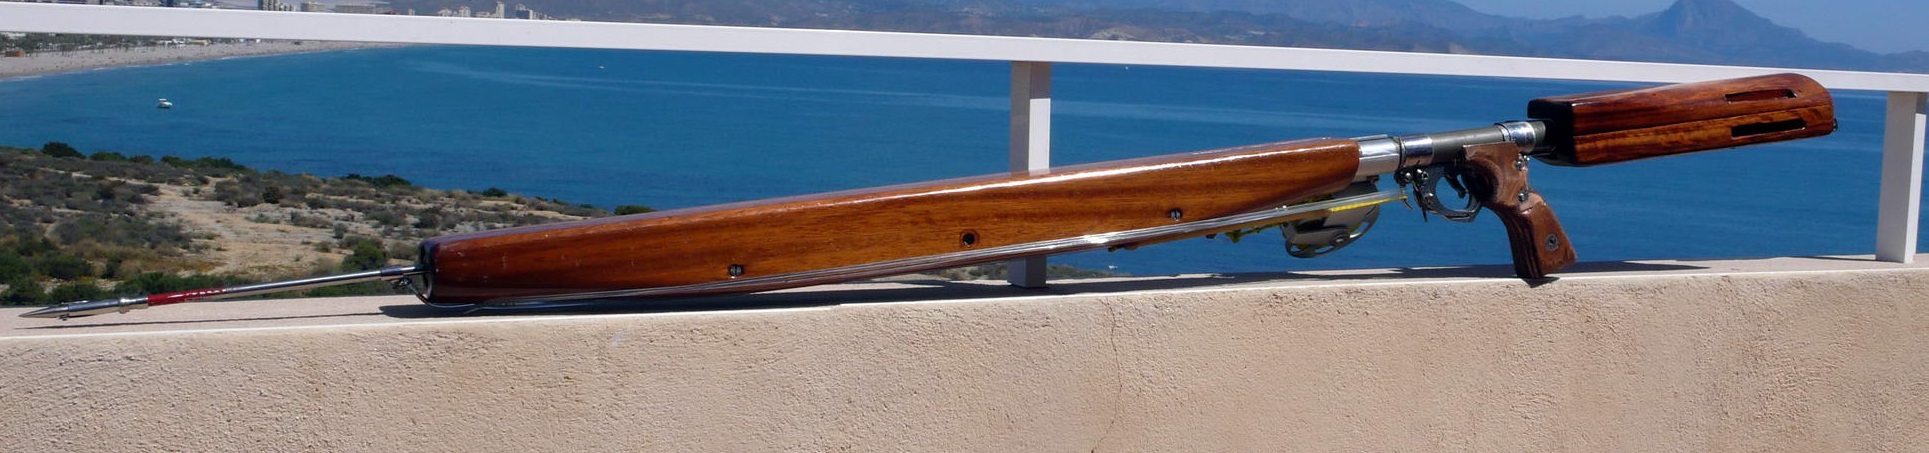 Aquatech Black Sea gun with buoyancy jacket in timber 2.jpg